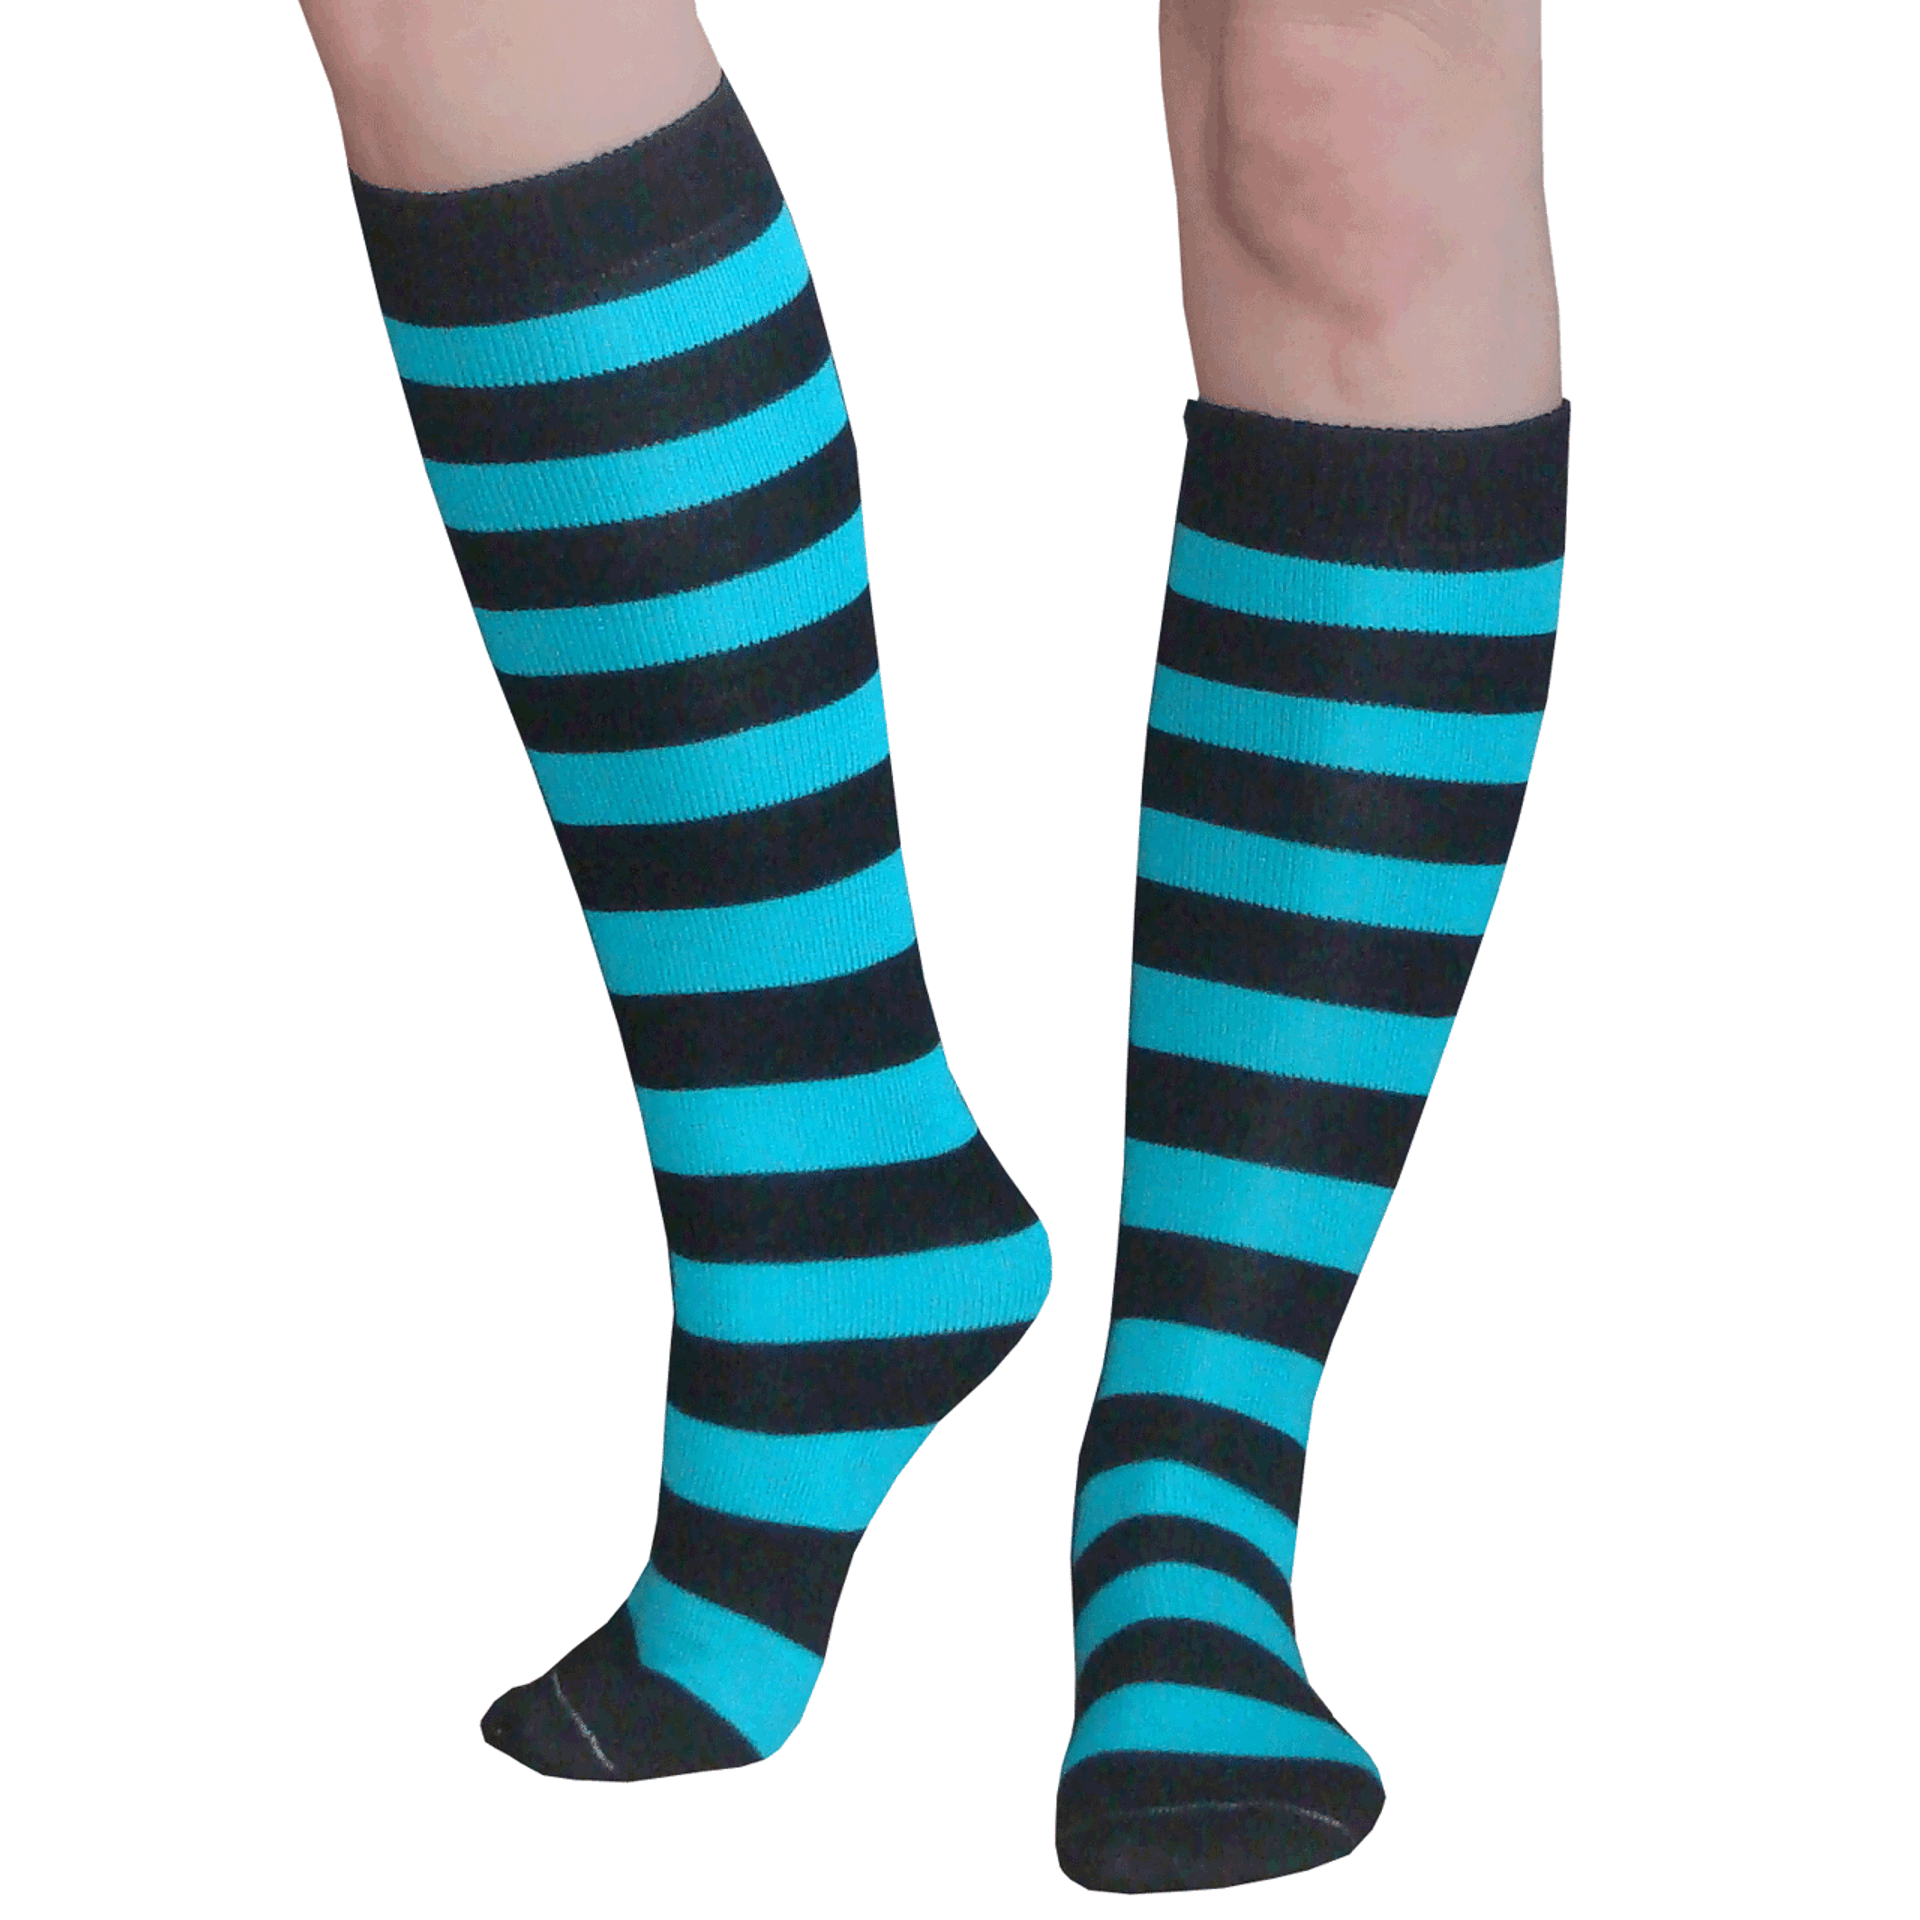 Striped Black/Teal Knee High Socks